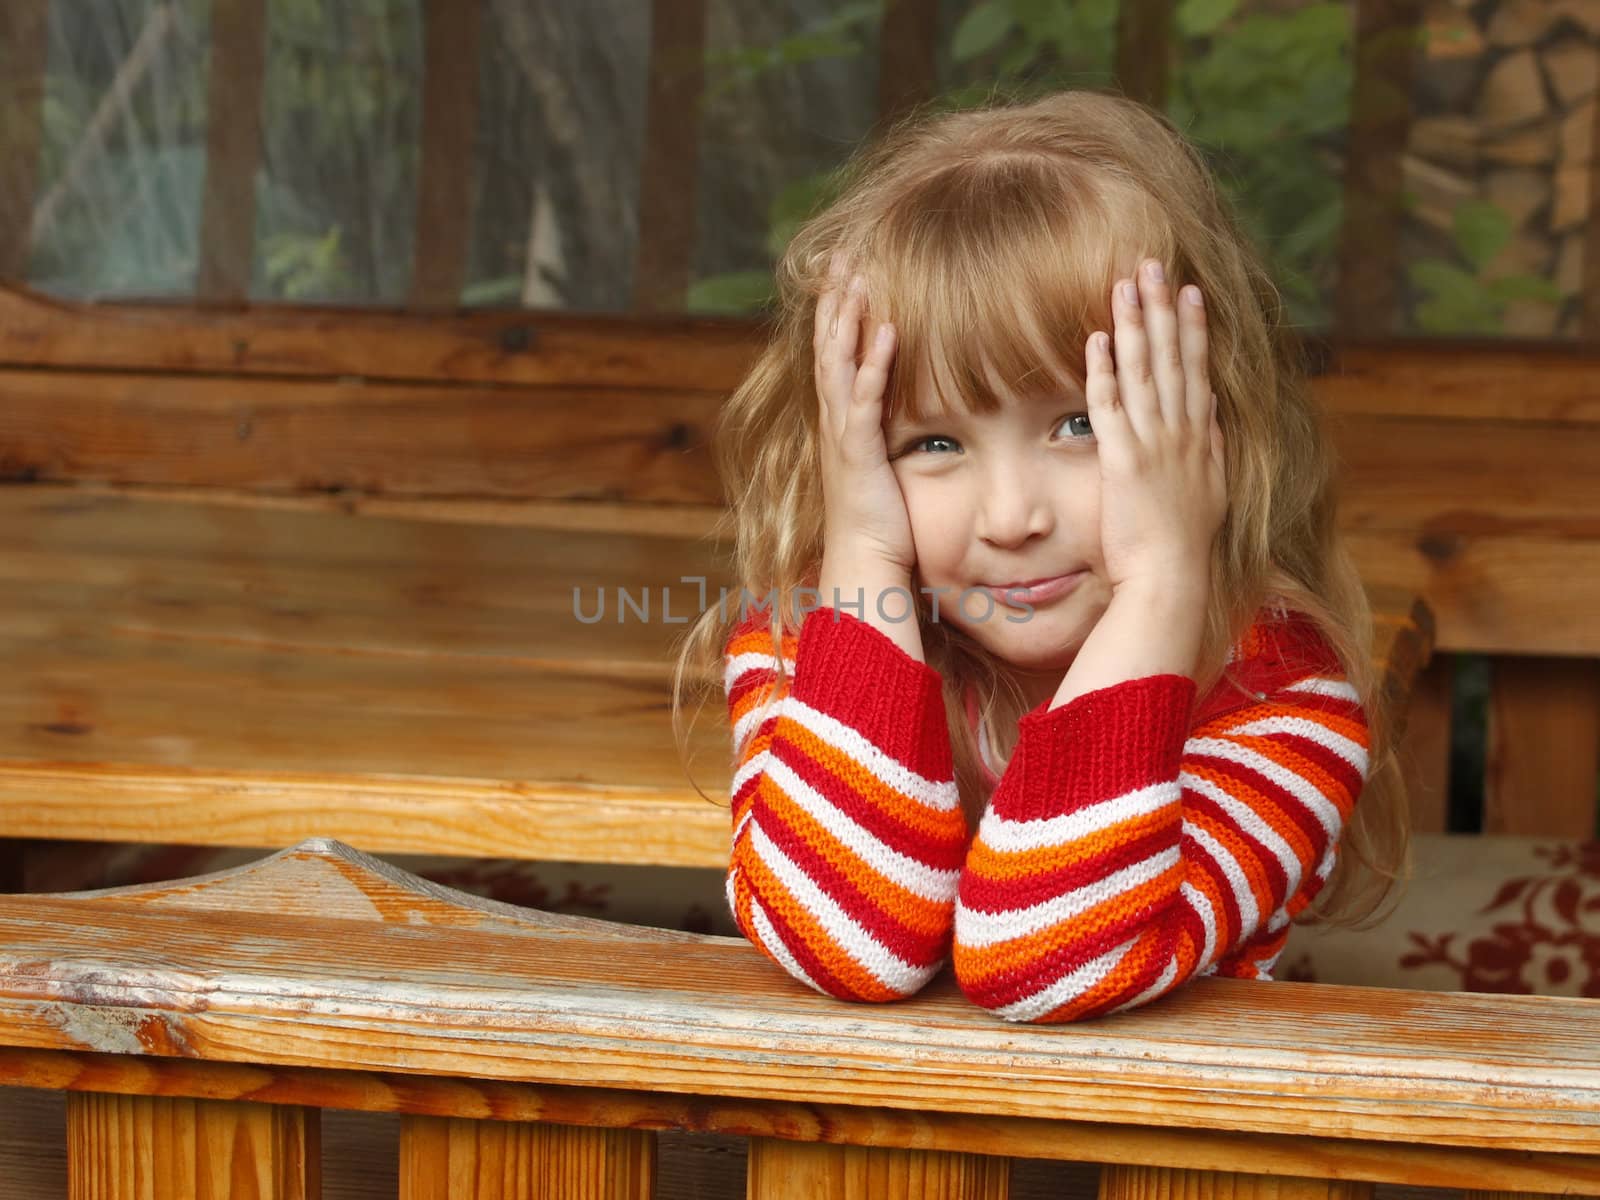 Little beautiful Caucasian girl in summer wooden canopy outdoor